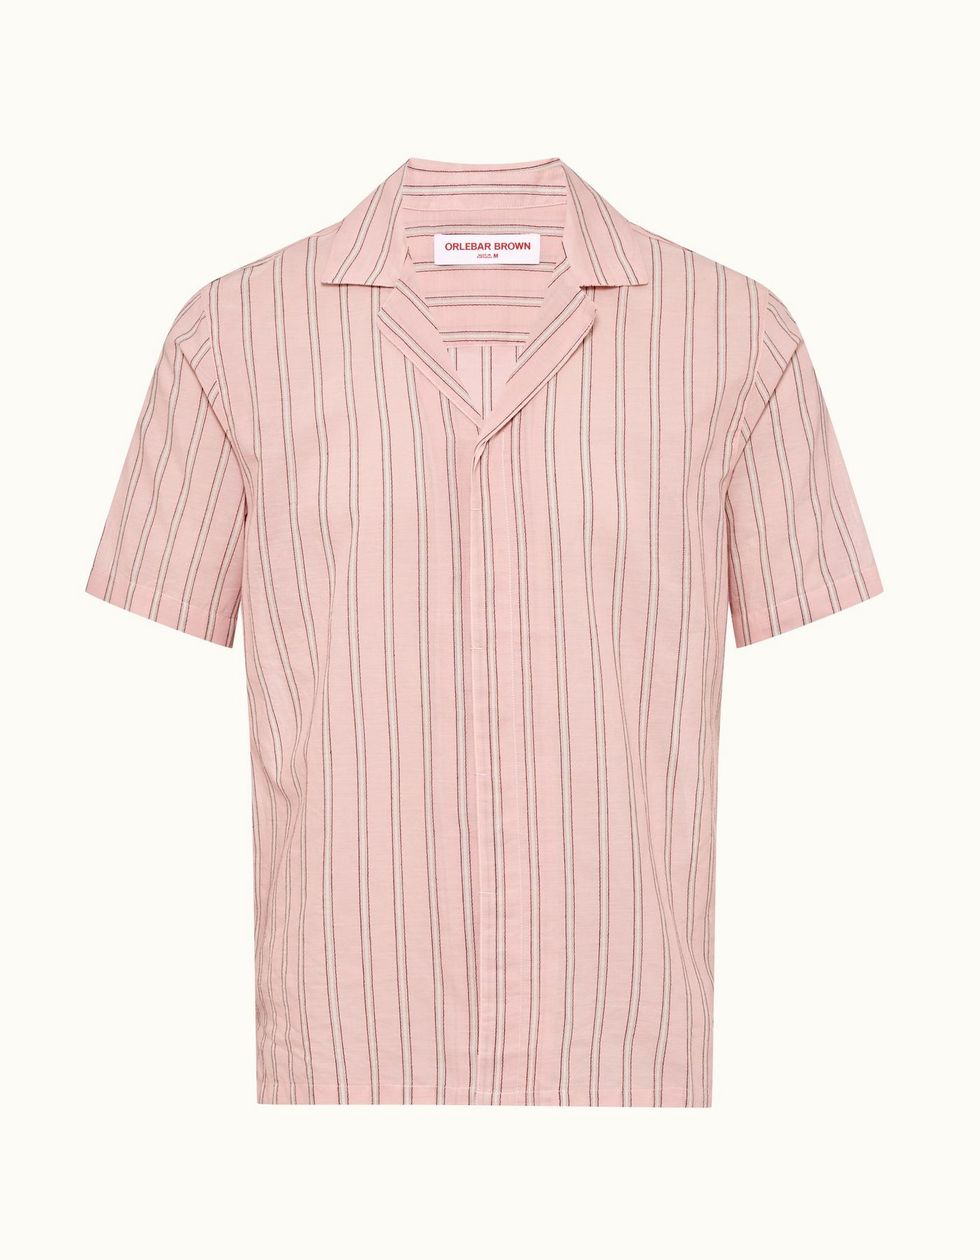 Maitan Camp-Collar Striped Cotton Shirt